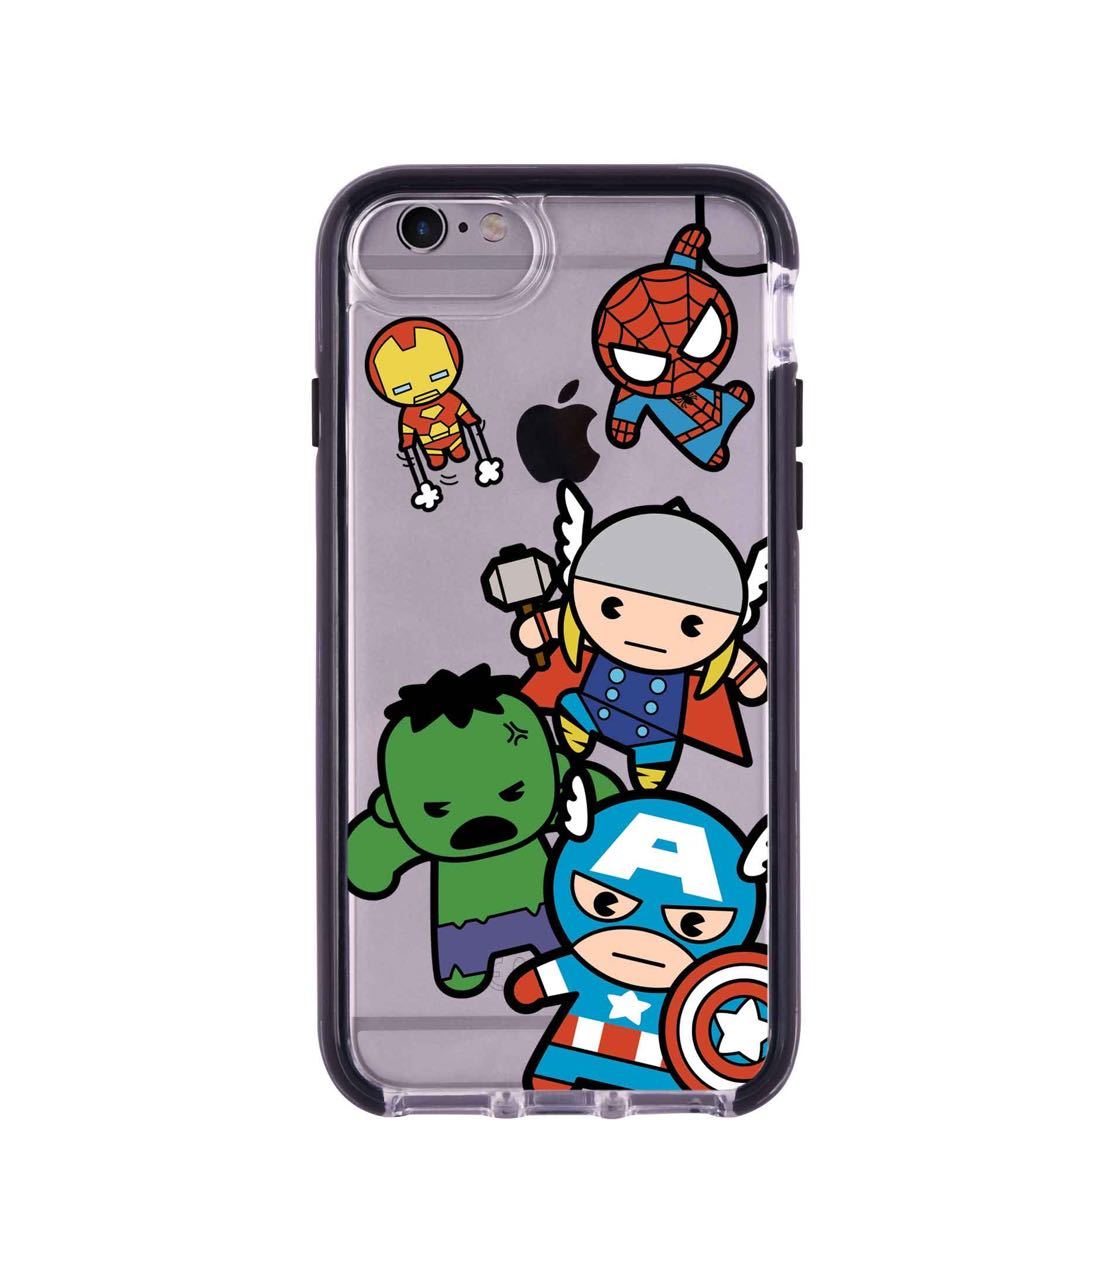 Kawaii Art Marvel Comics - Extreme Phone Case for iPhone 6 Plus